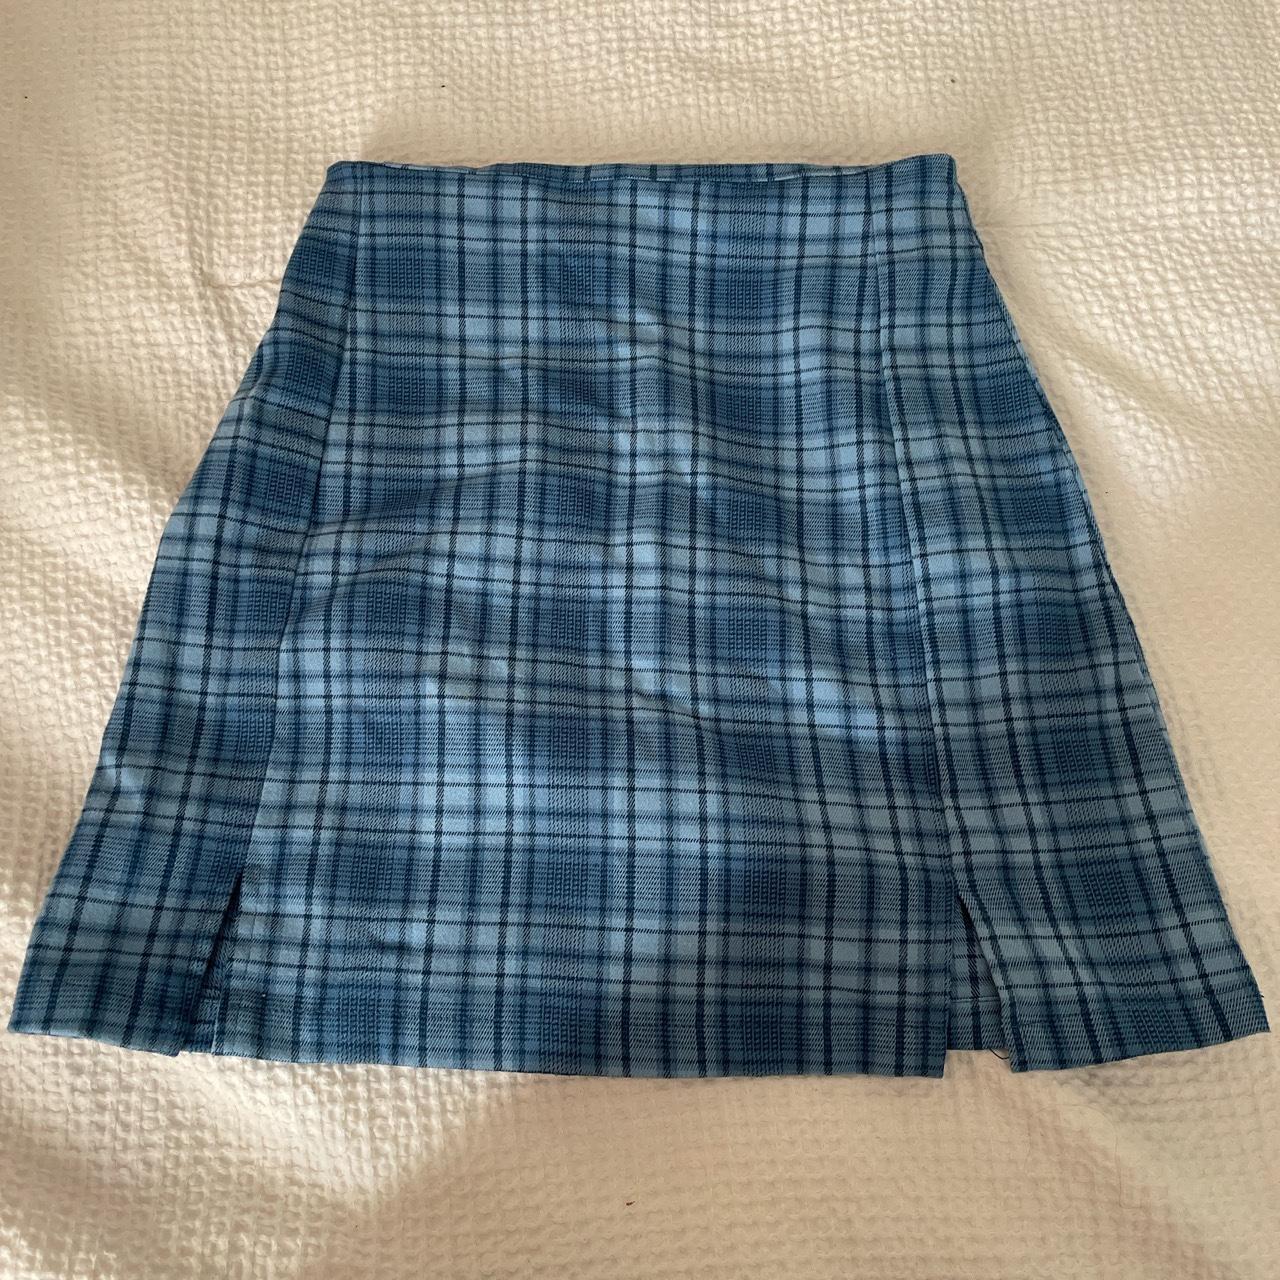 Brandy Melville skirt - Depop